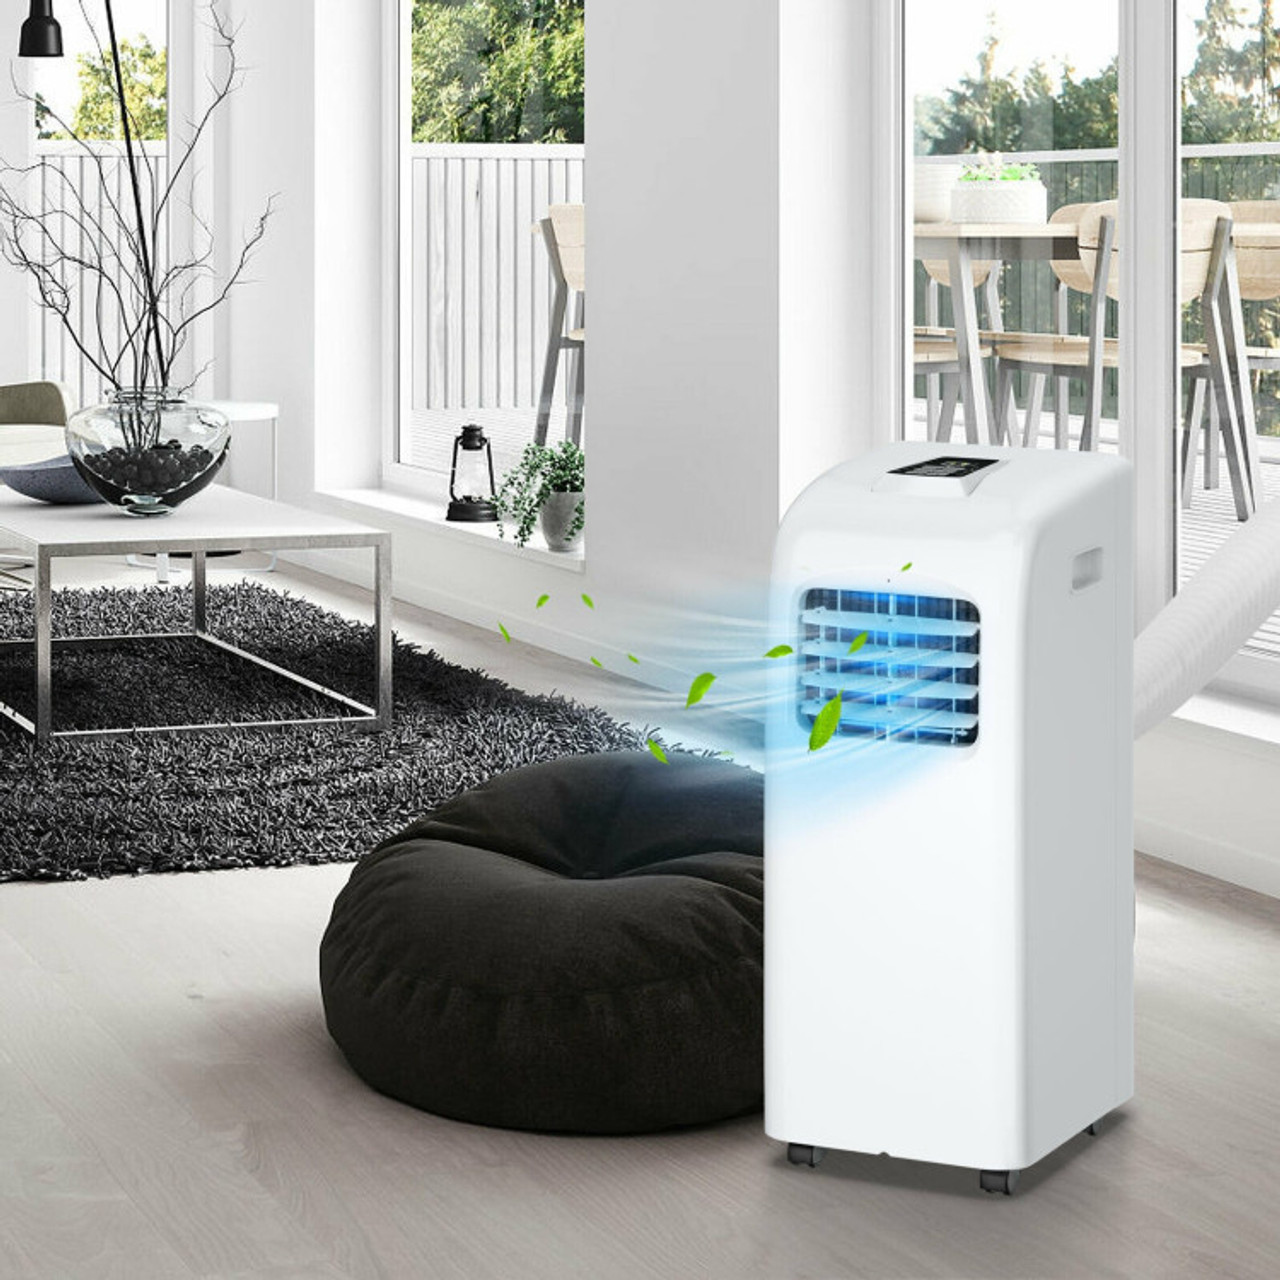 8,000BTU Portable Air Conditioner & Dehumidifier product image